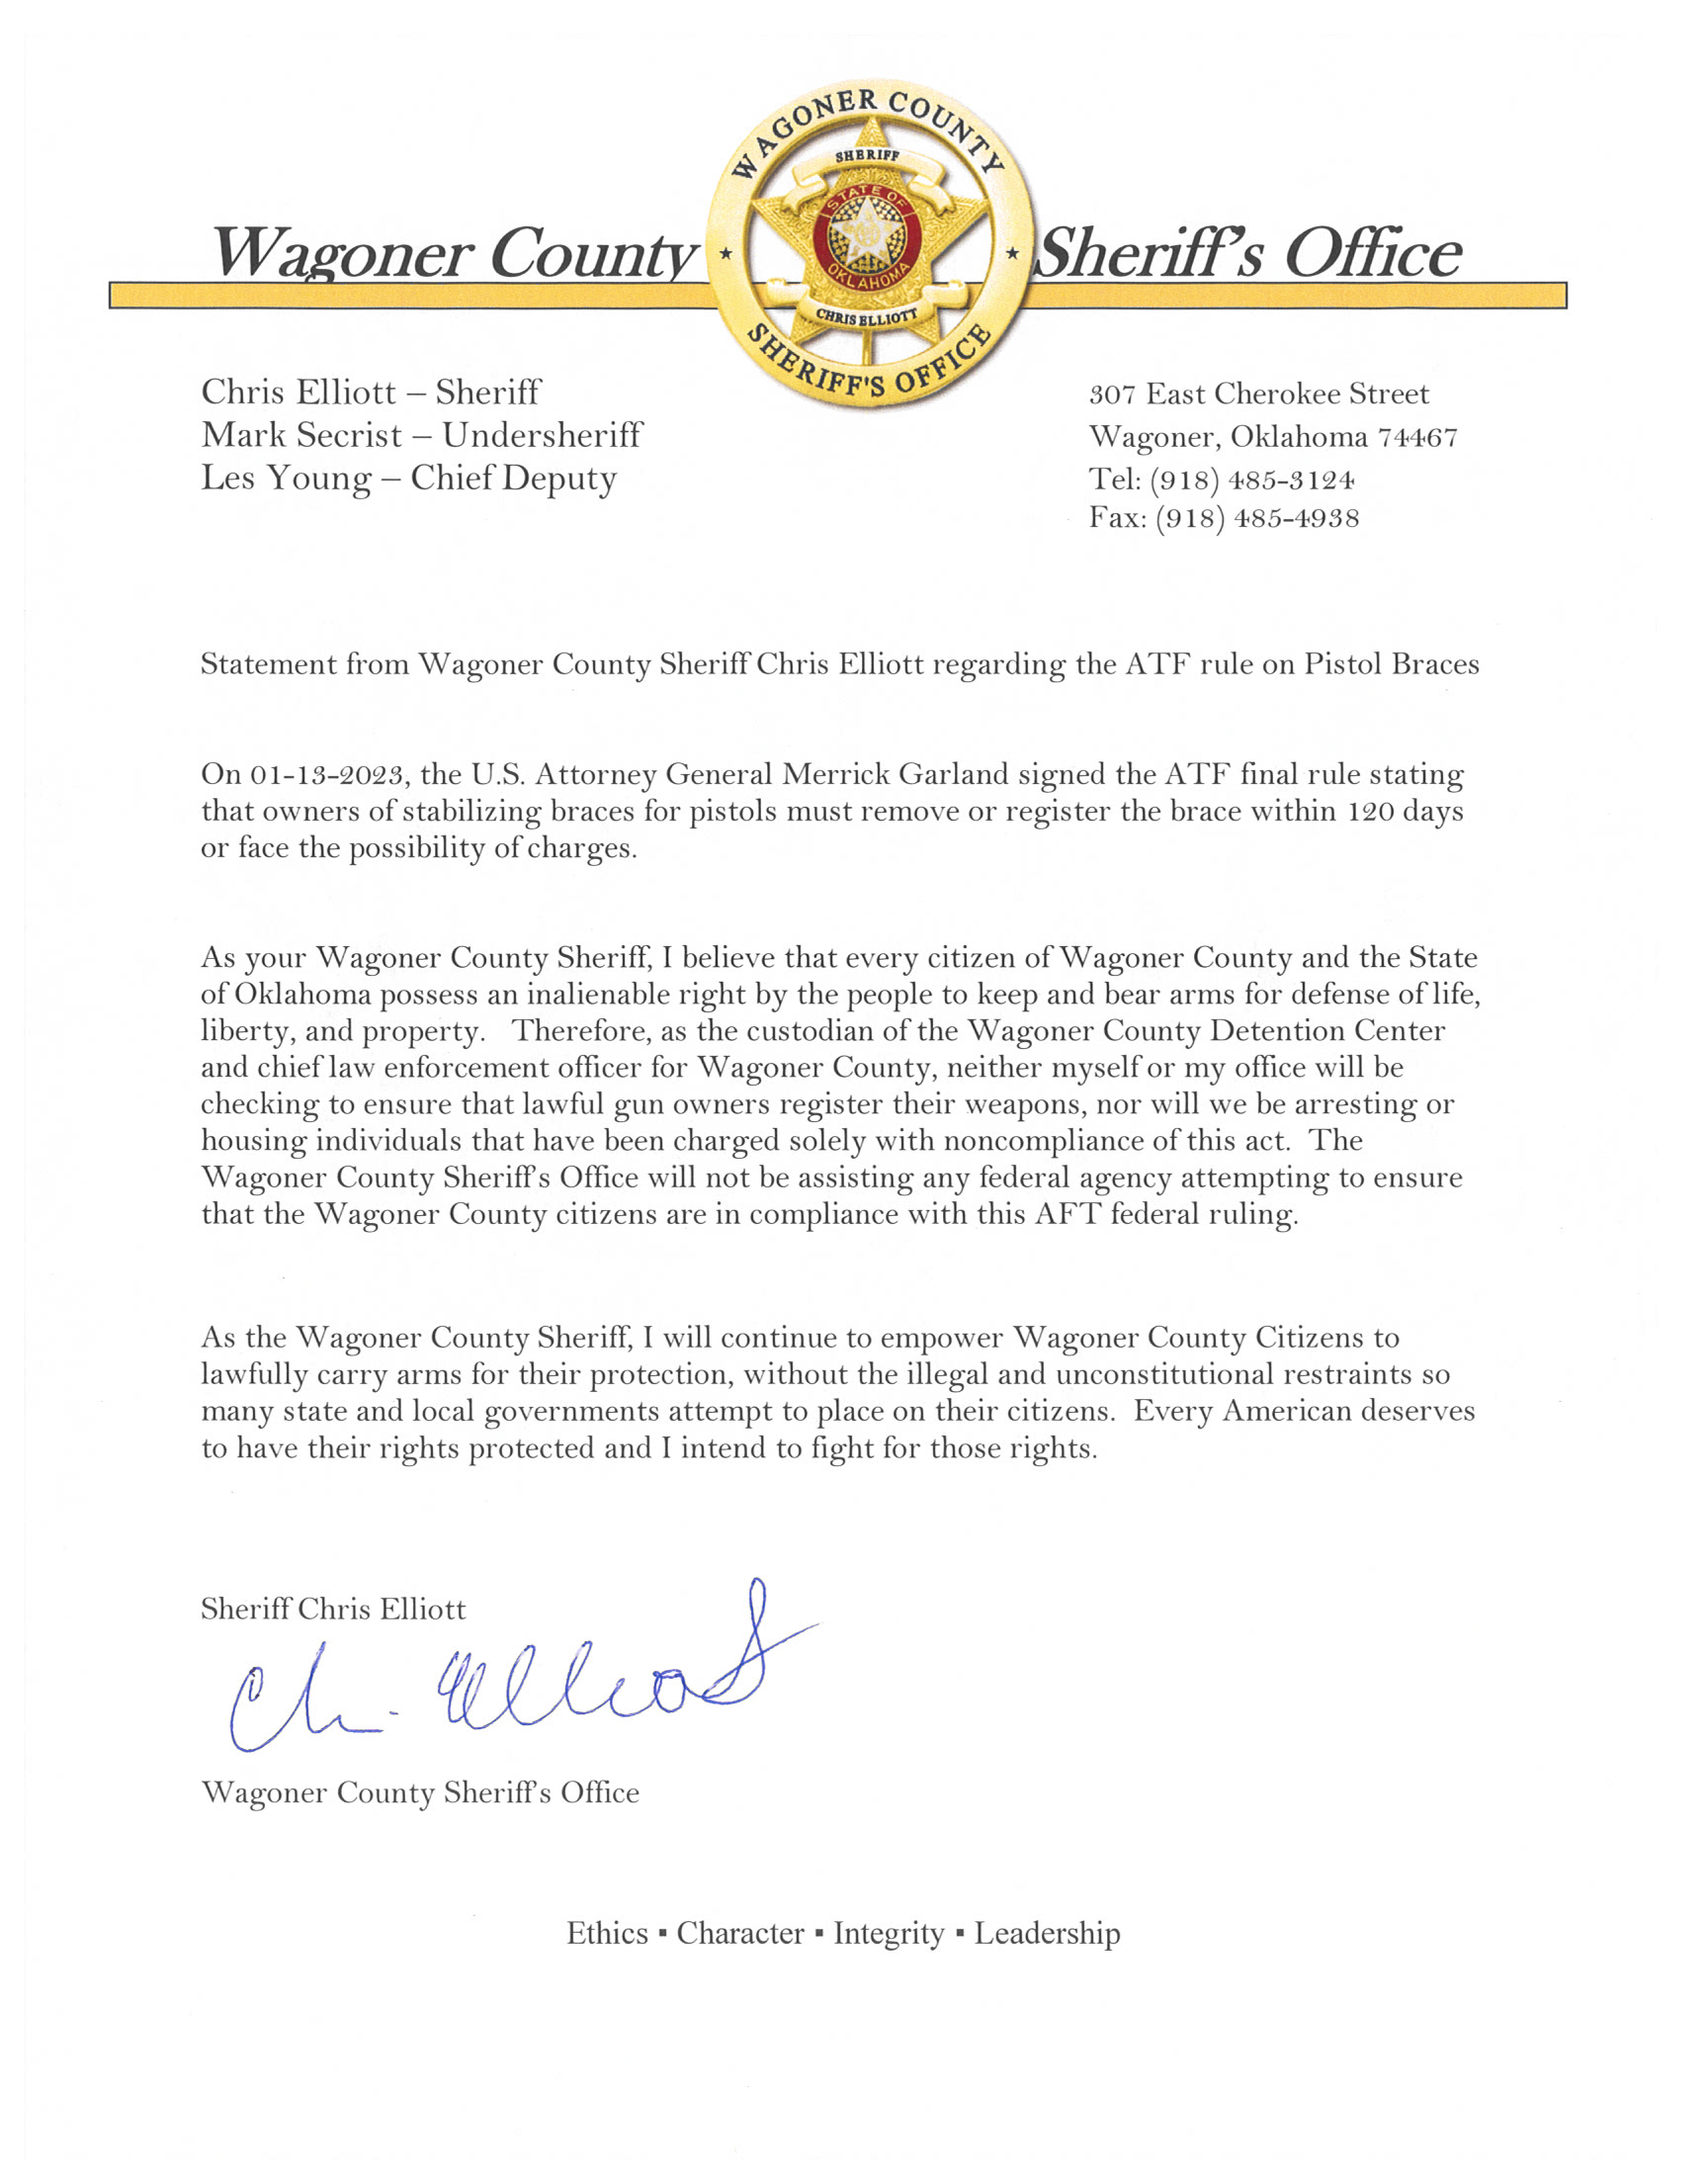 Statement from Wagoner County Sheriff Chris Elliott regarding the ATF rule on Pistol Braces